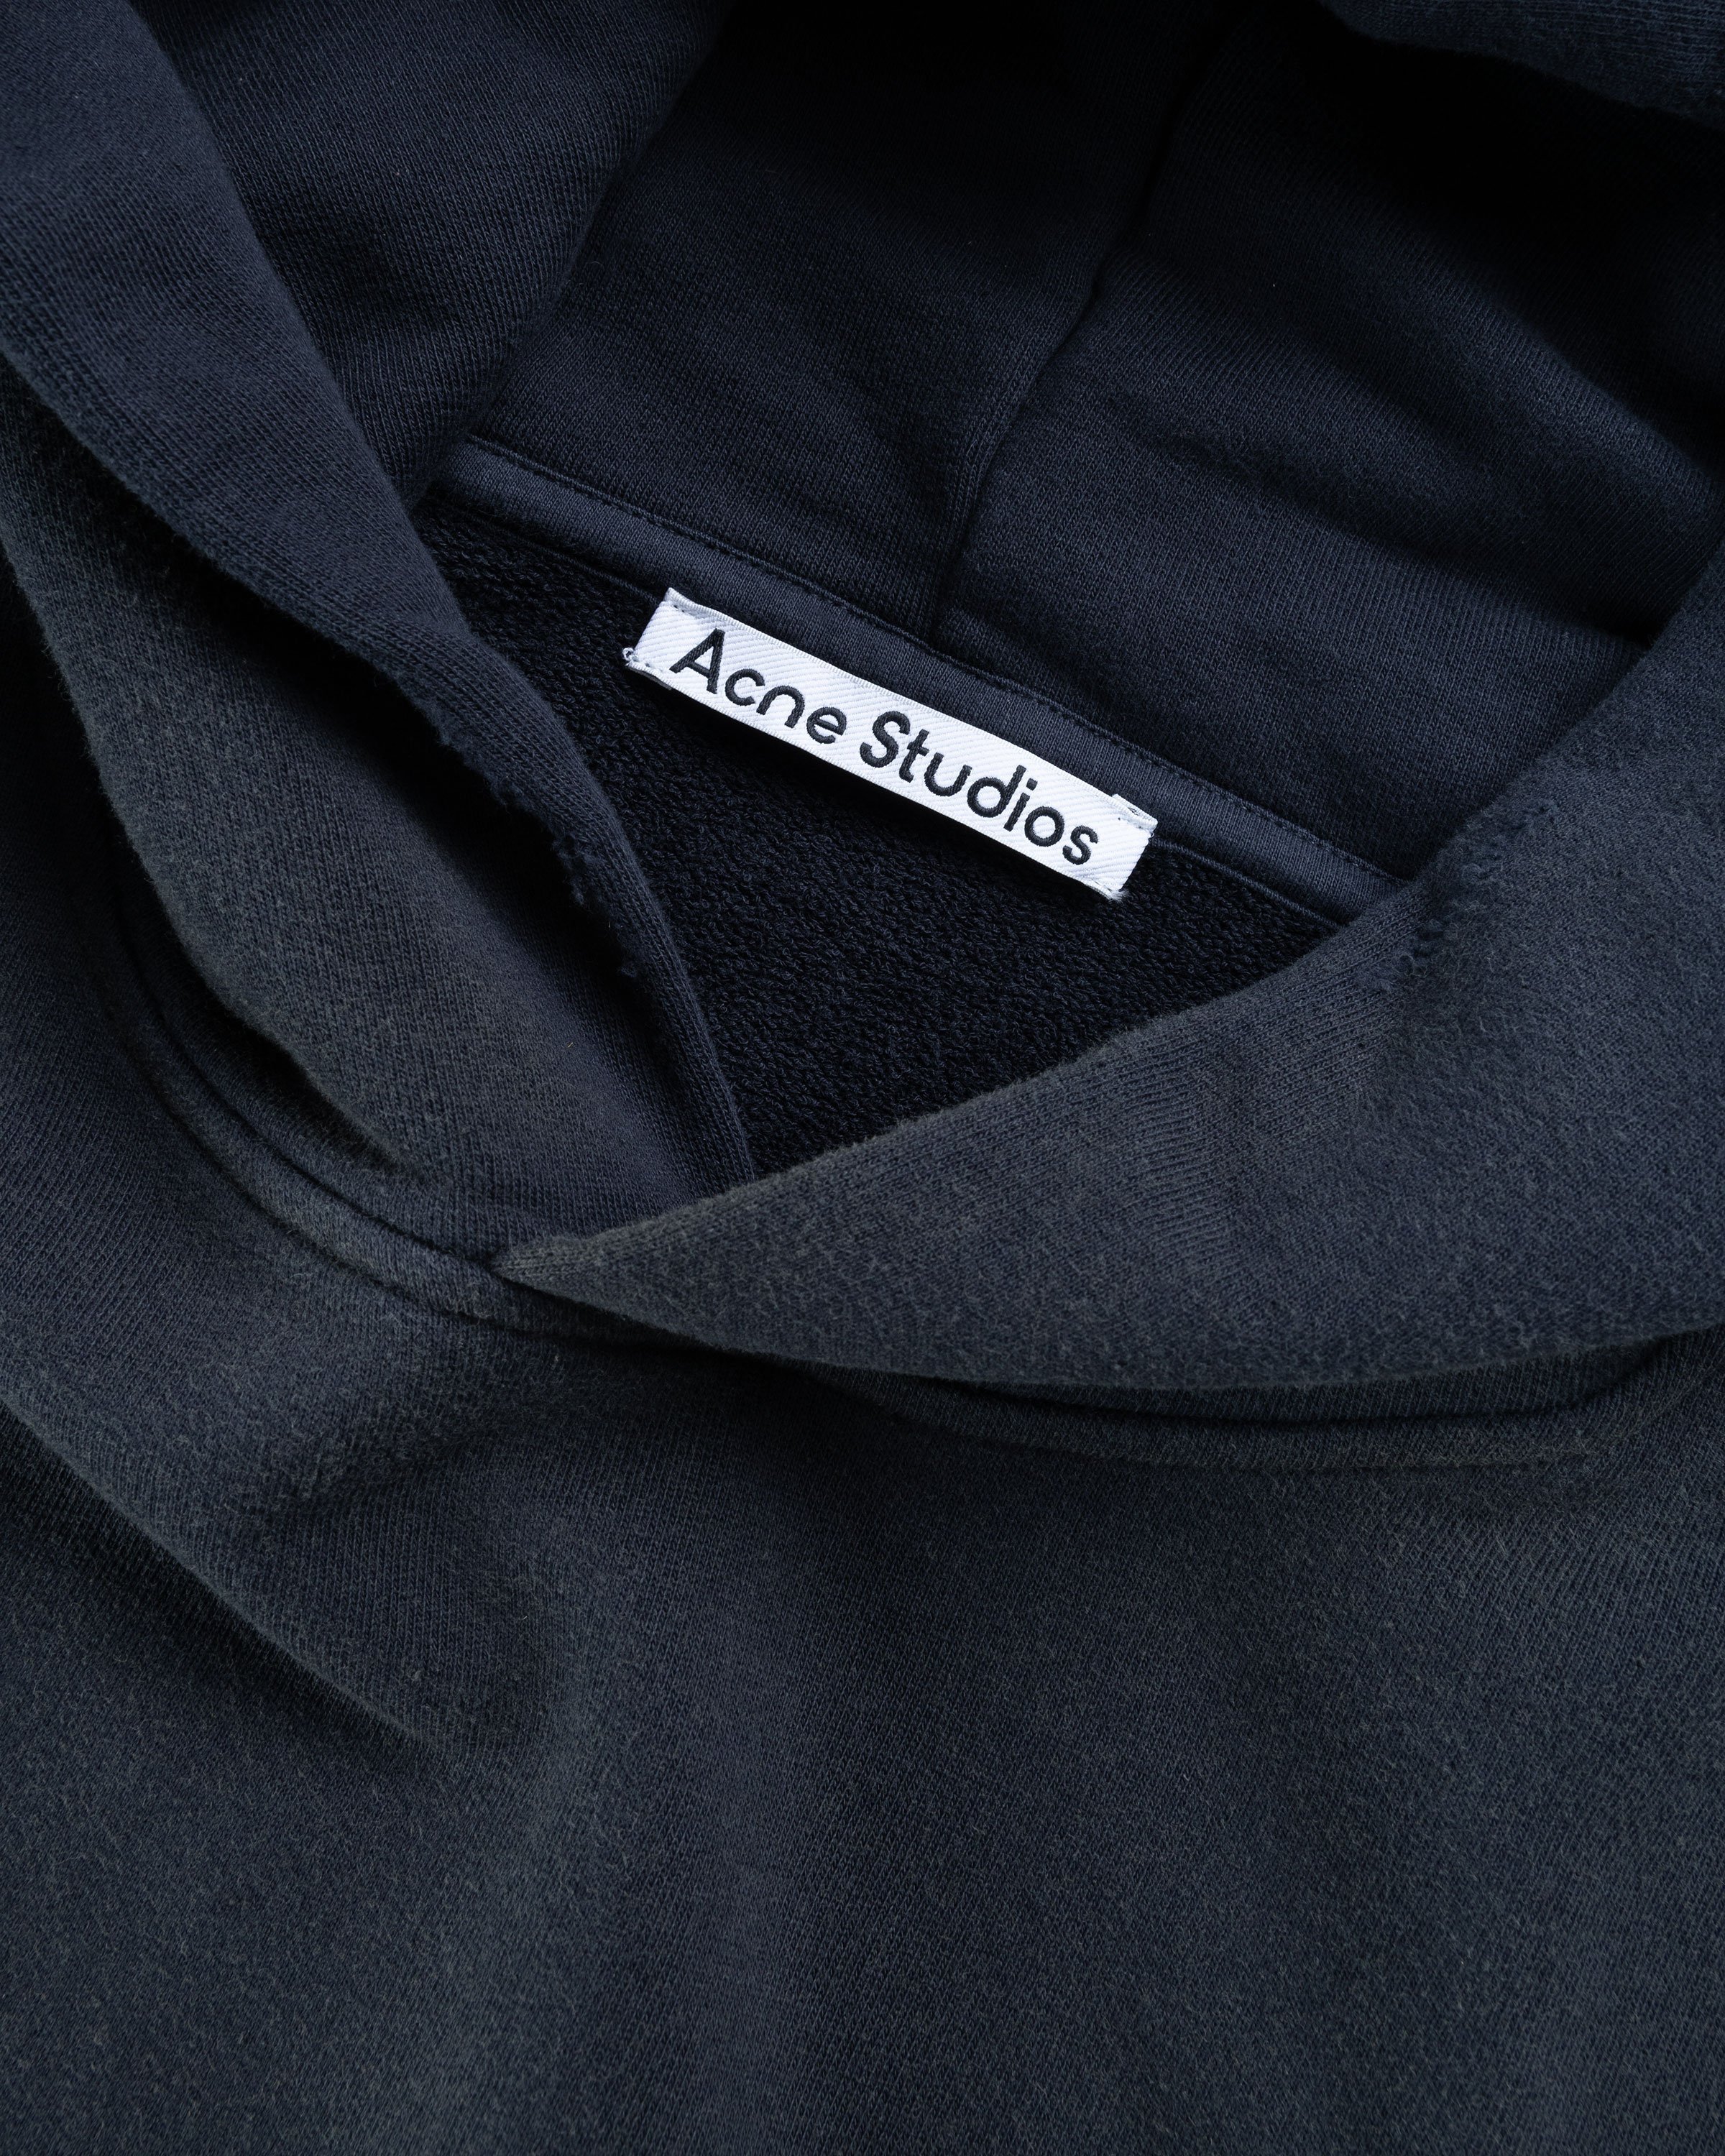 Acne Studios - Logo Hoodie Black - Clothing - Black - Image 5